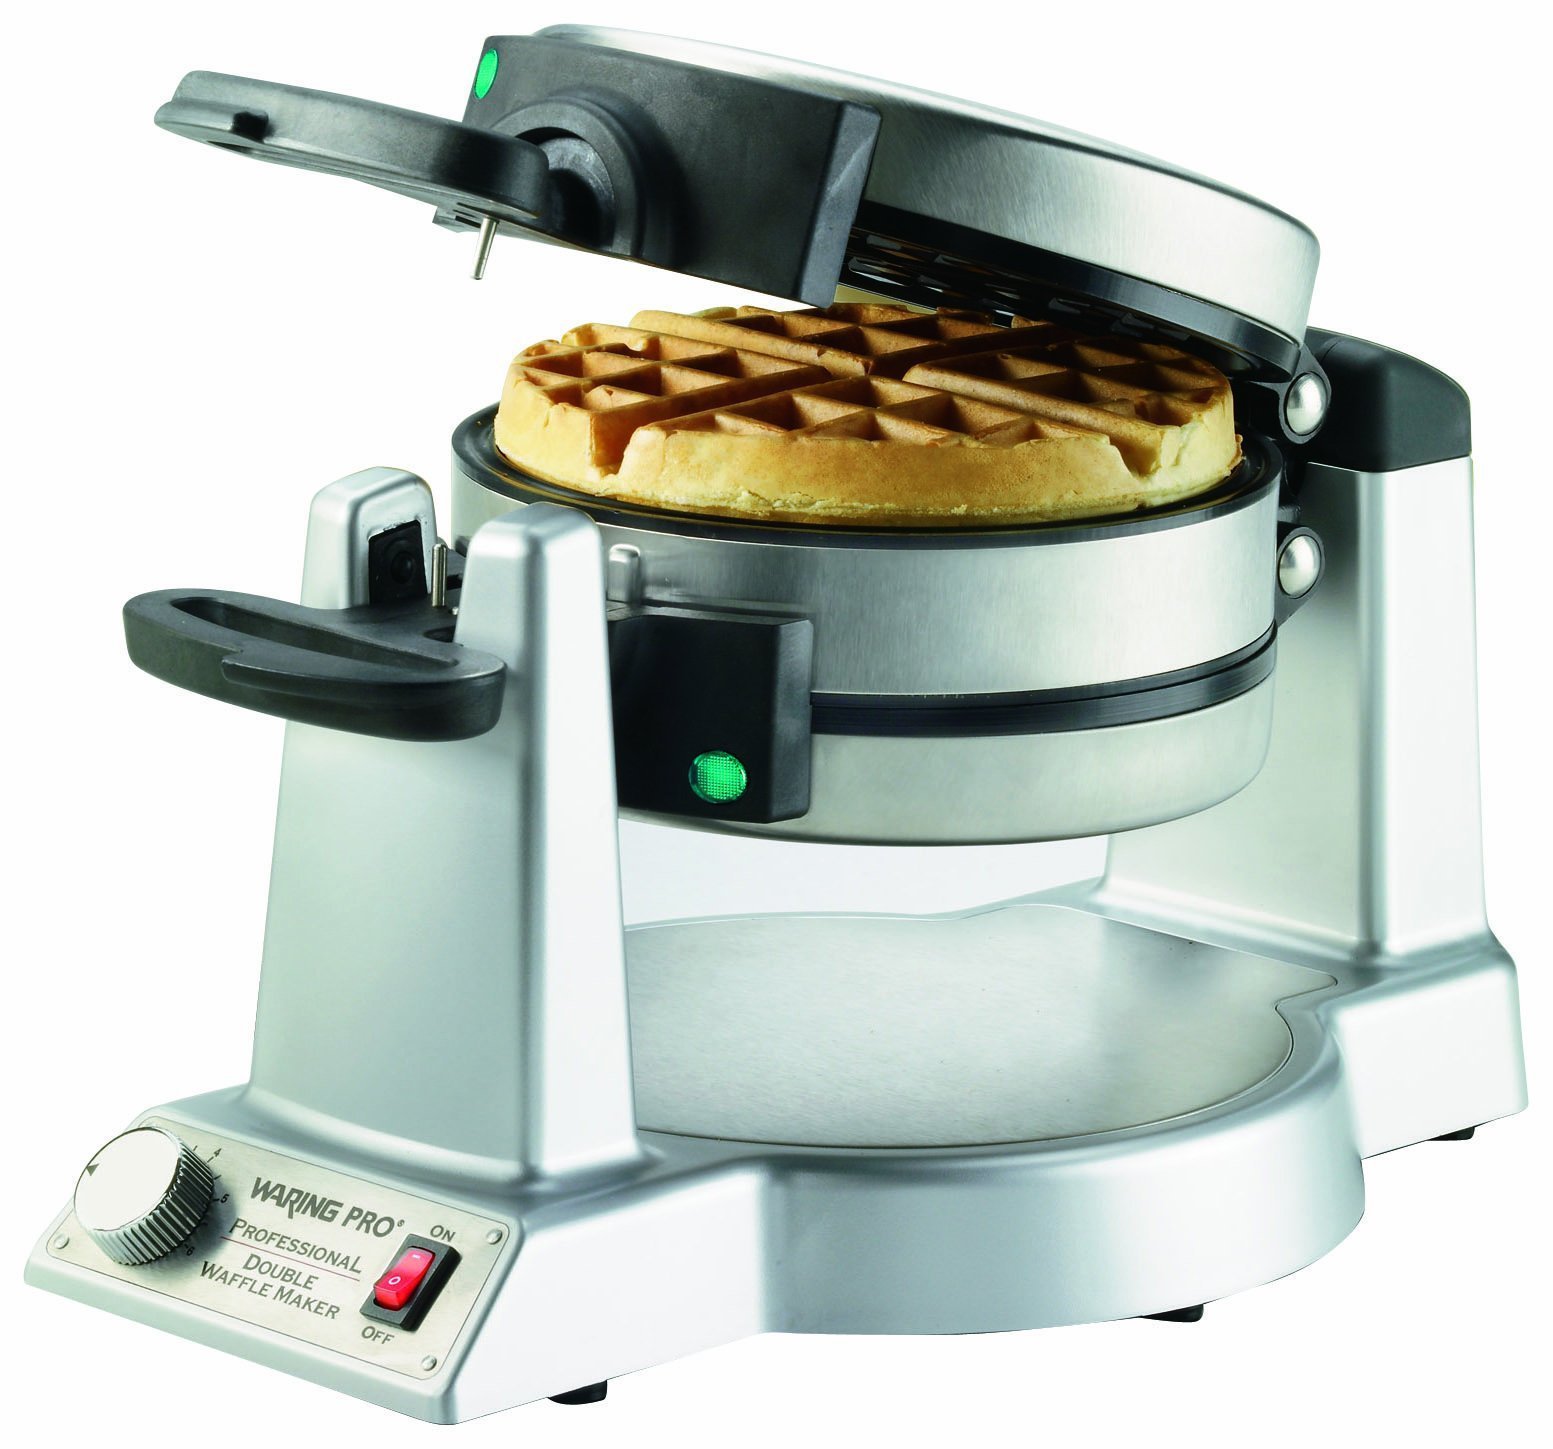 Waring WMK600 Double Belgian Waffle Maker Review